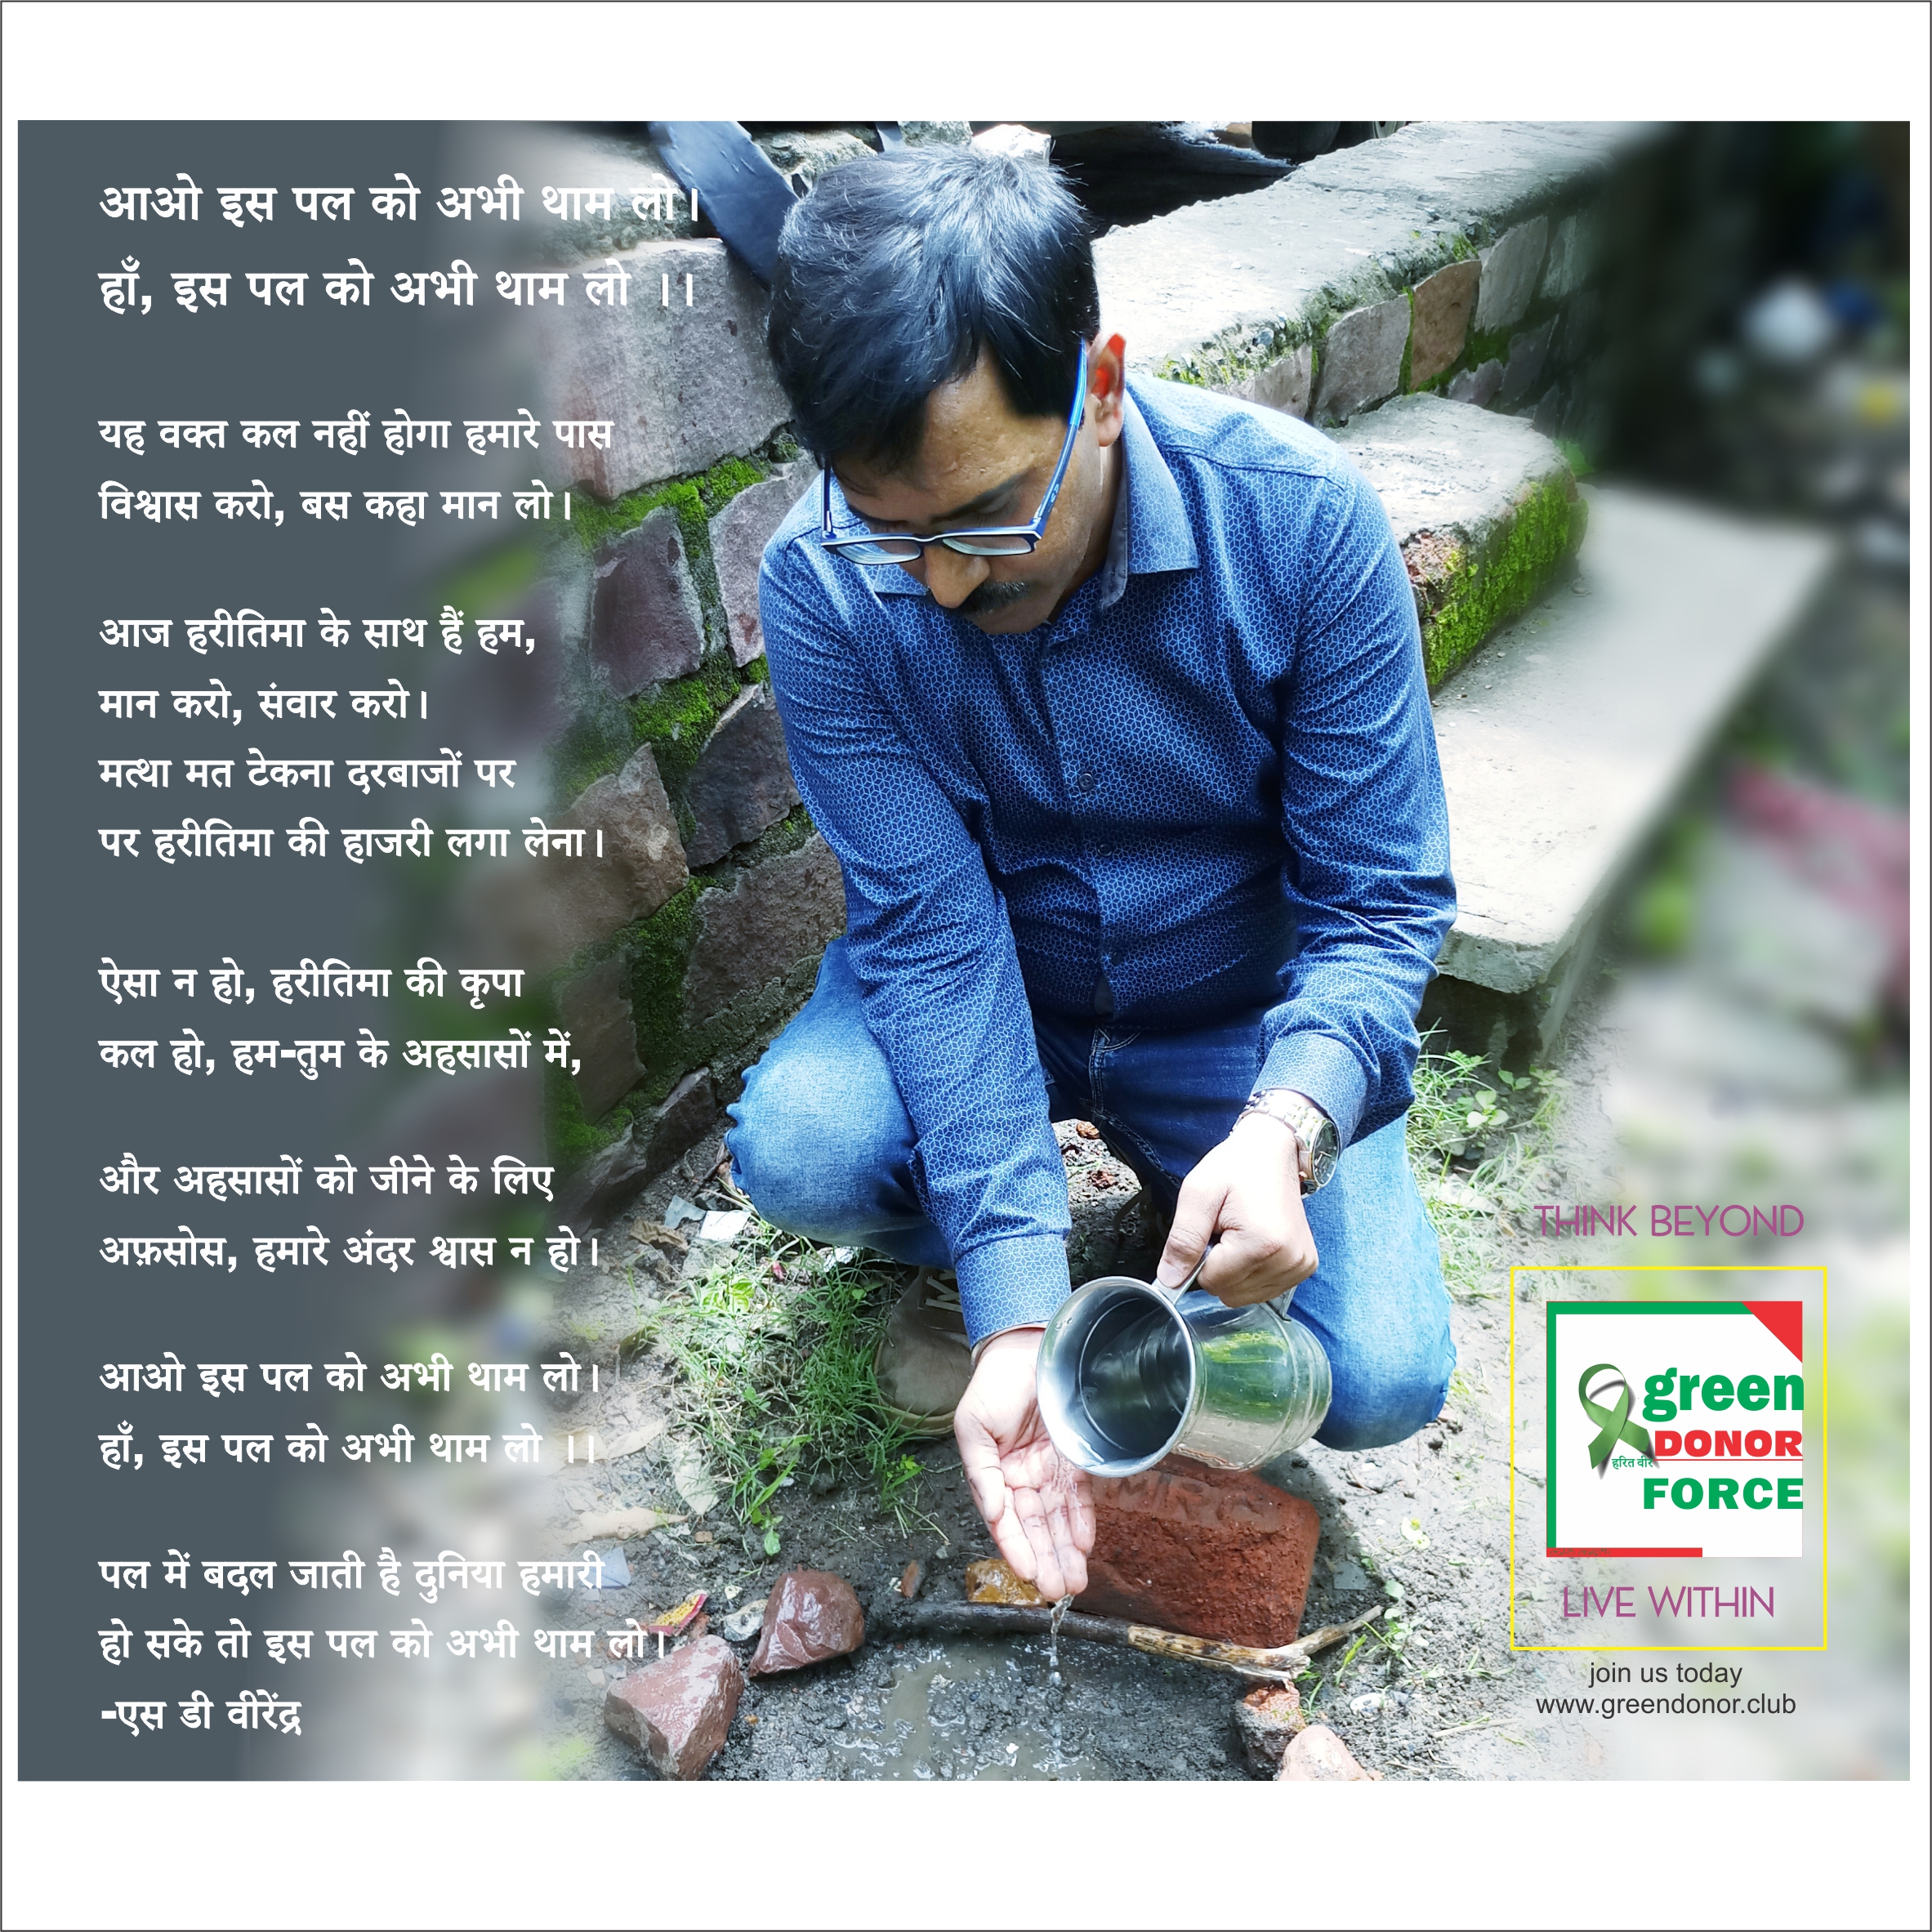 GREEN DONOR TEAM Madhya Pradesh ITDC NEWS #GreenDonor 